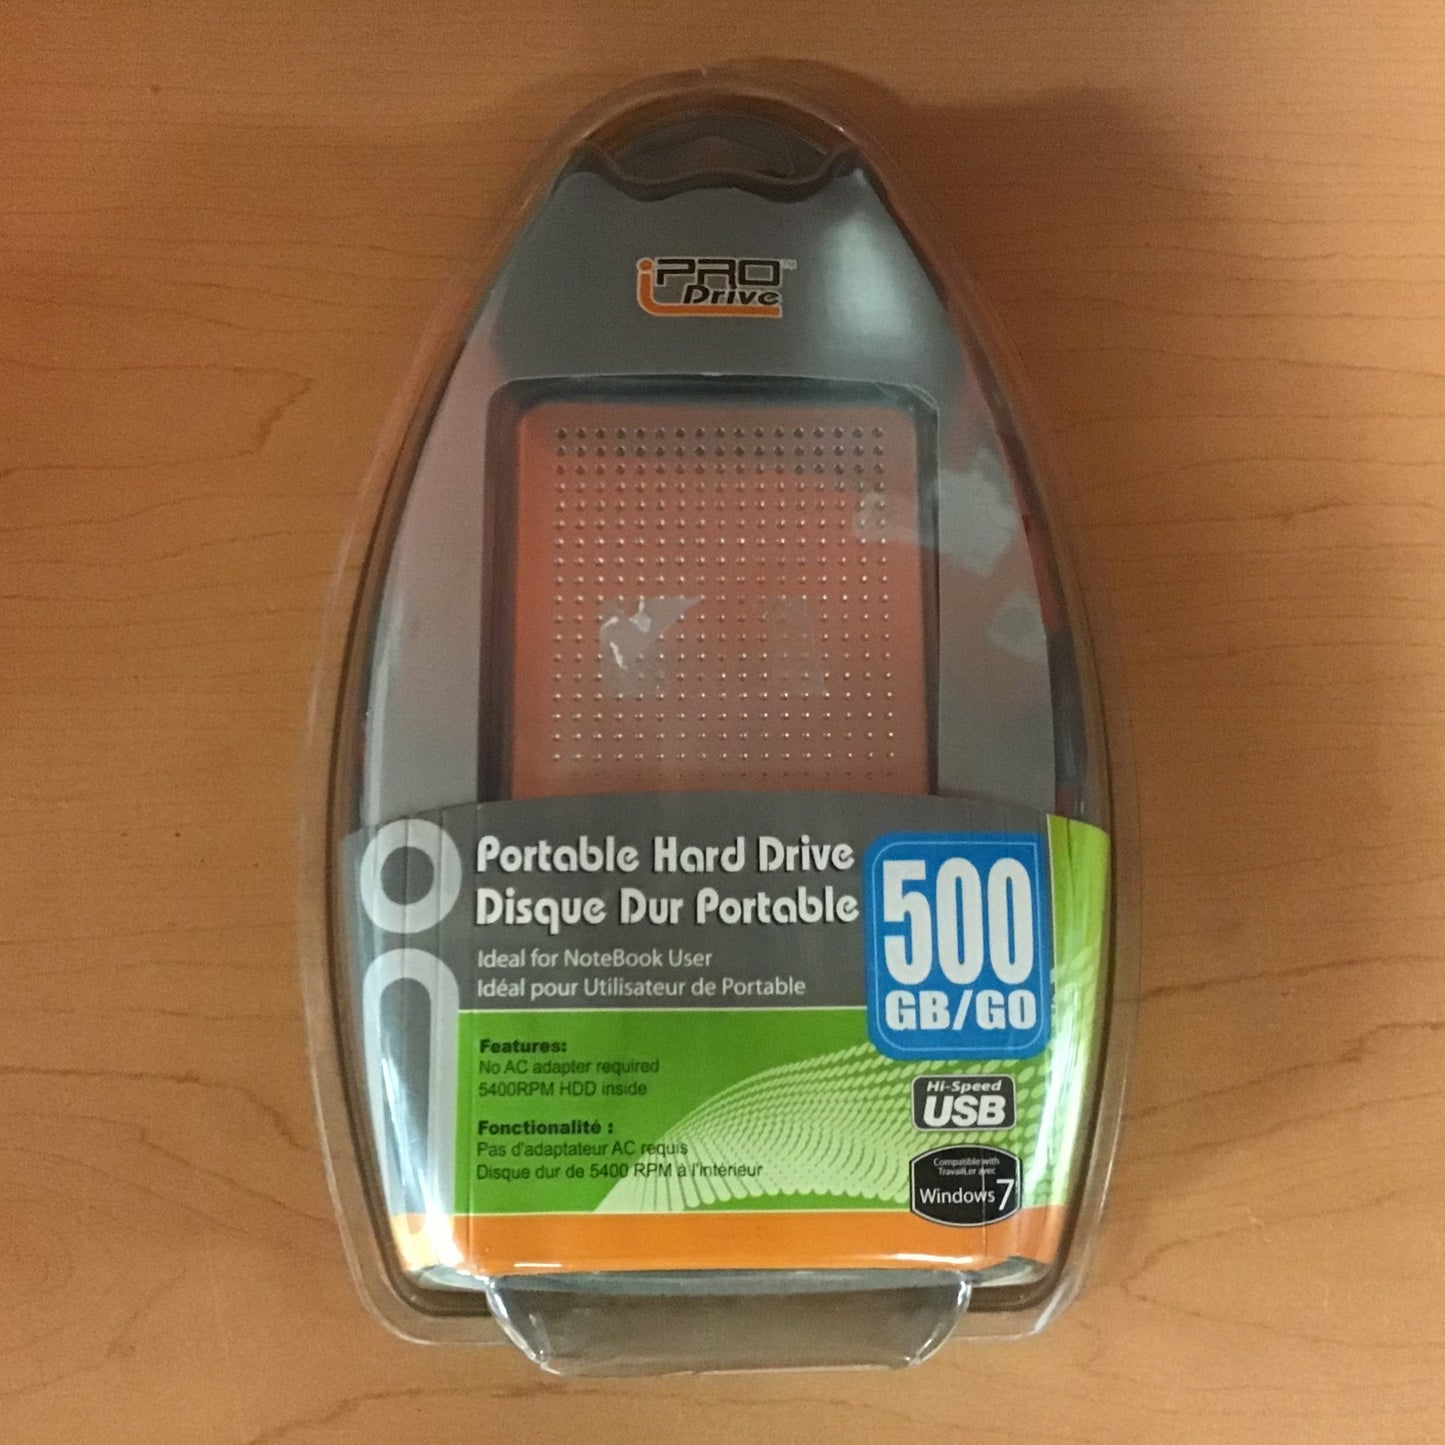 iPRO Drive 500 GB Portable Hard Drive